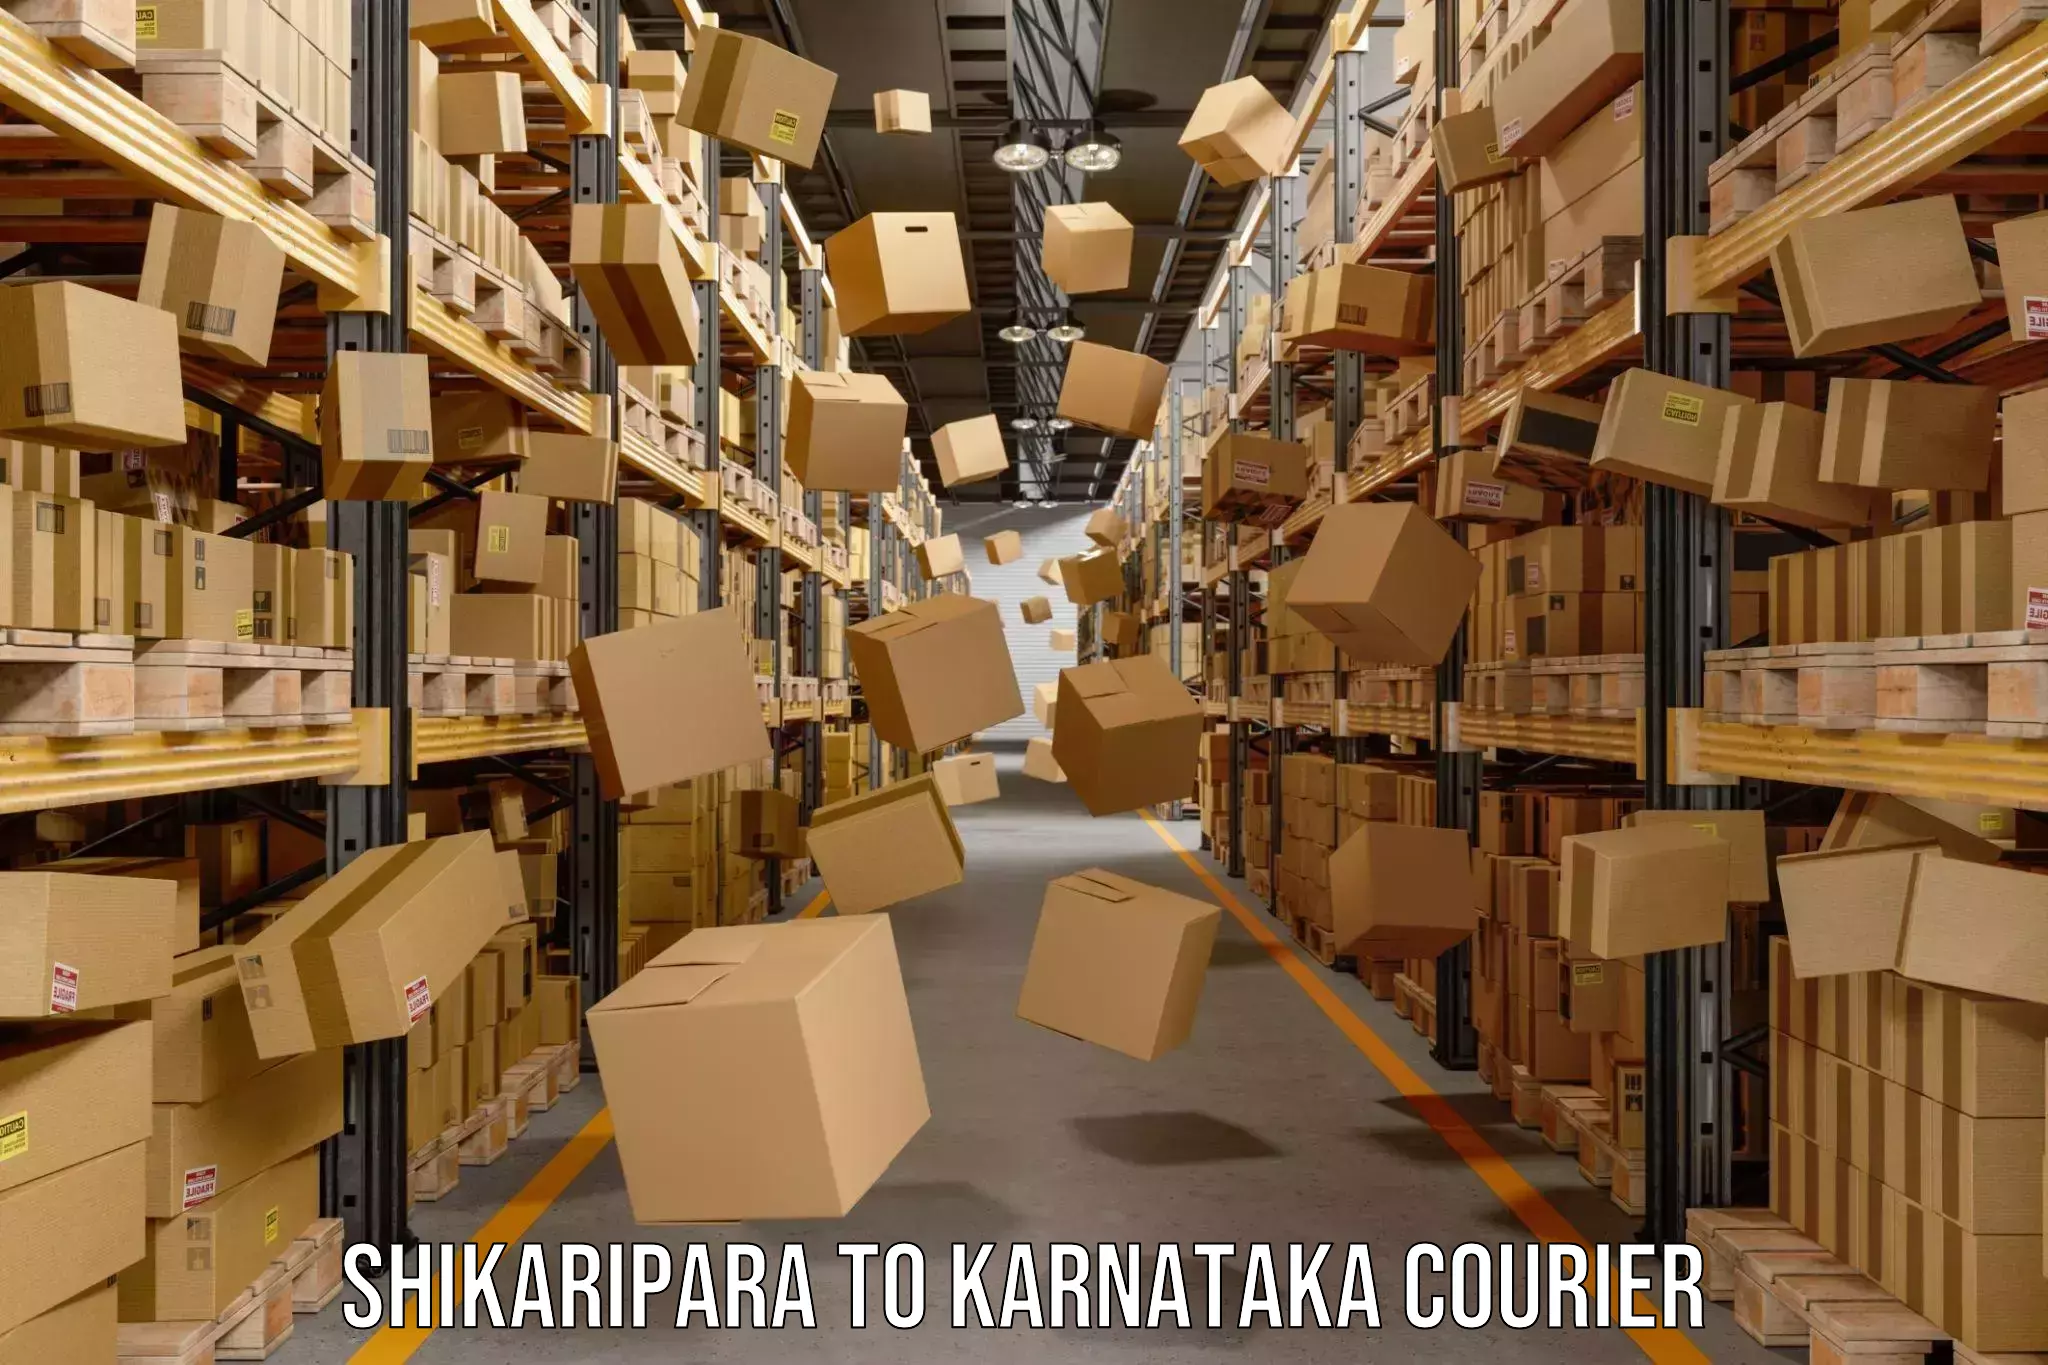 Local delivery service Shikaripara to Karnataka